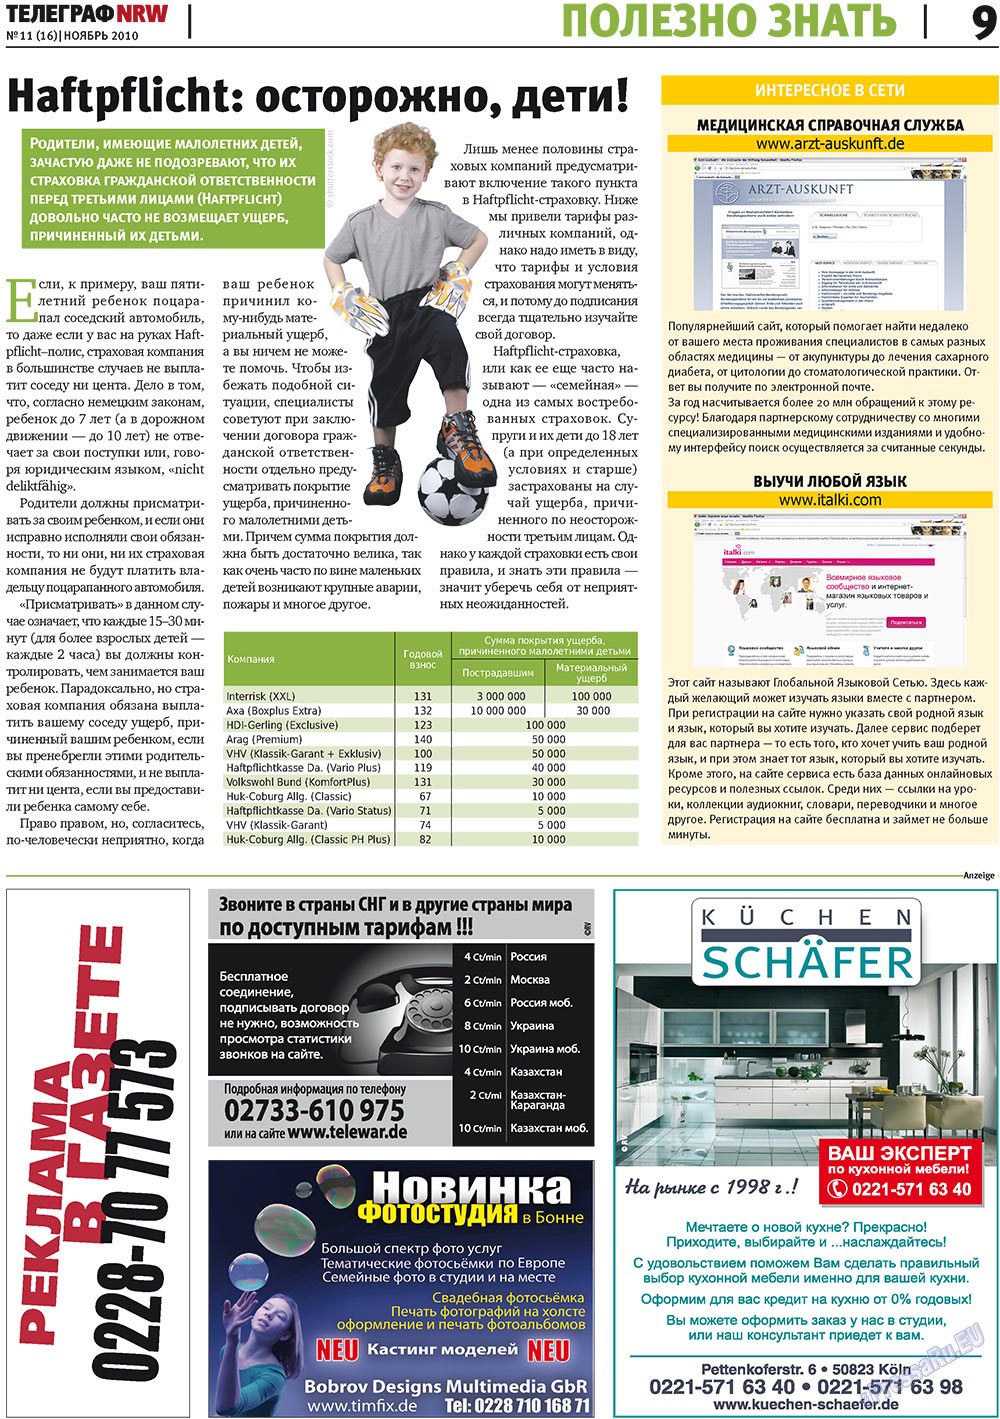 Телеграф NRW, газета. 2010 №11 стр.9